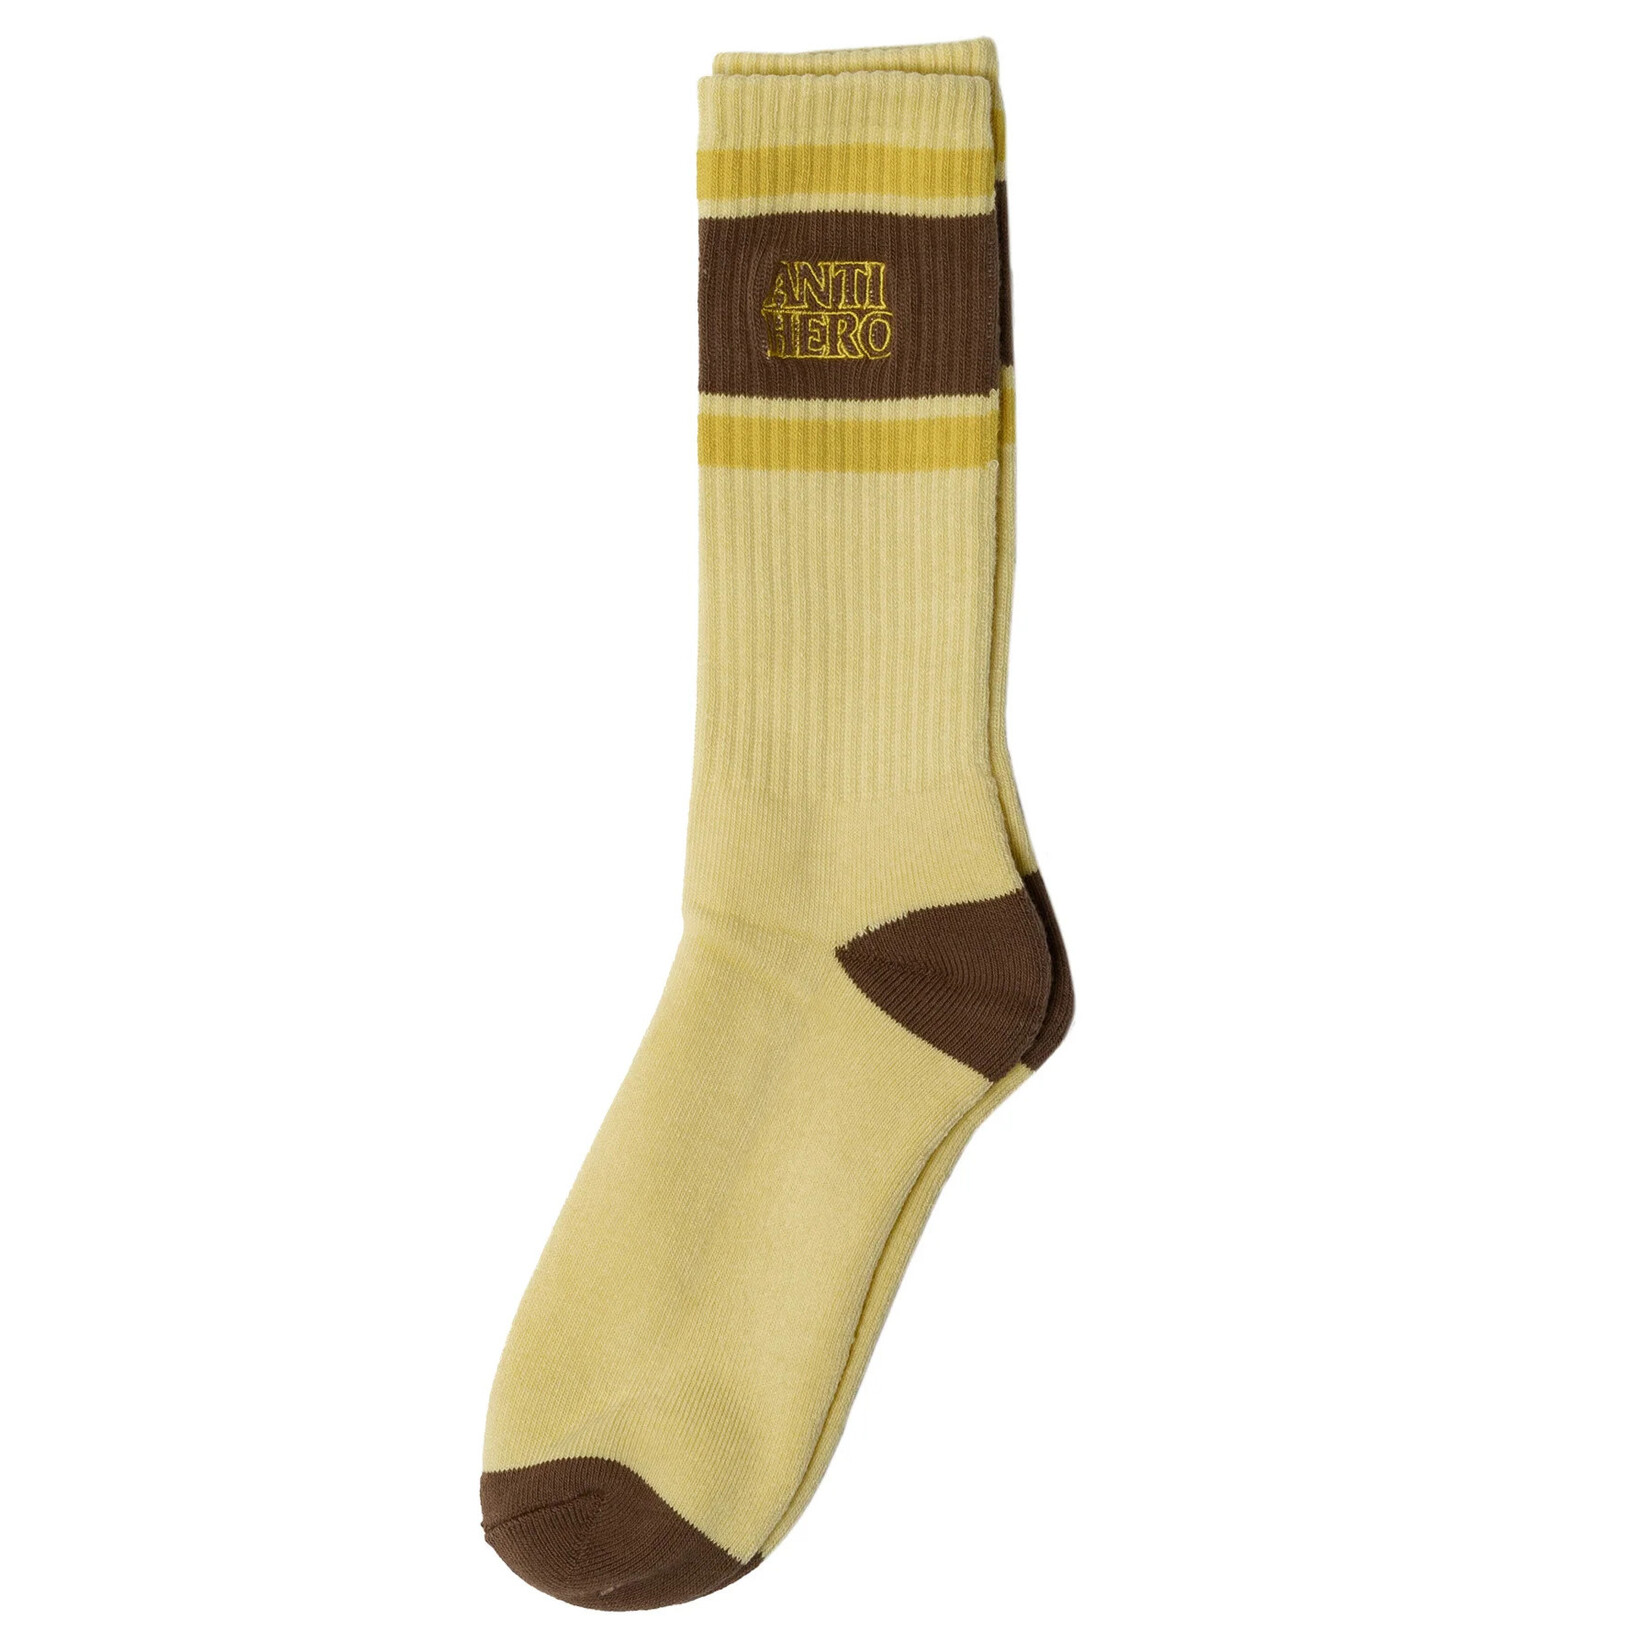 Anti Hero Anti Hero Black Hero Outline Socks - Cream/Brown/Gold